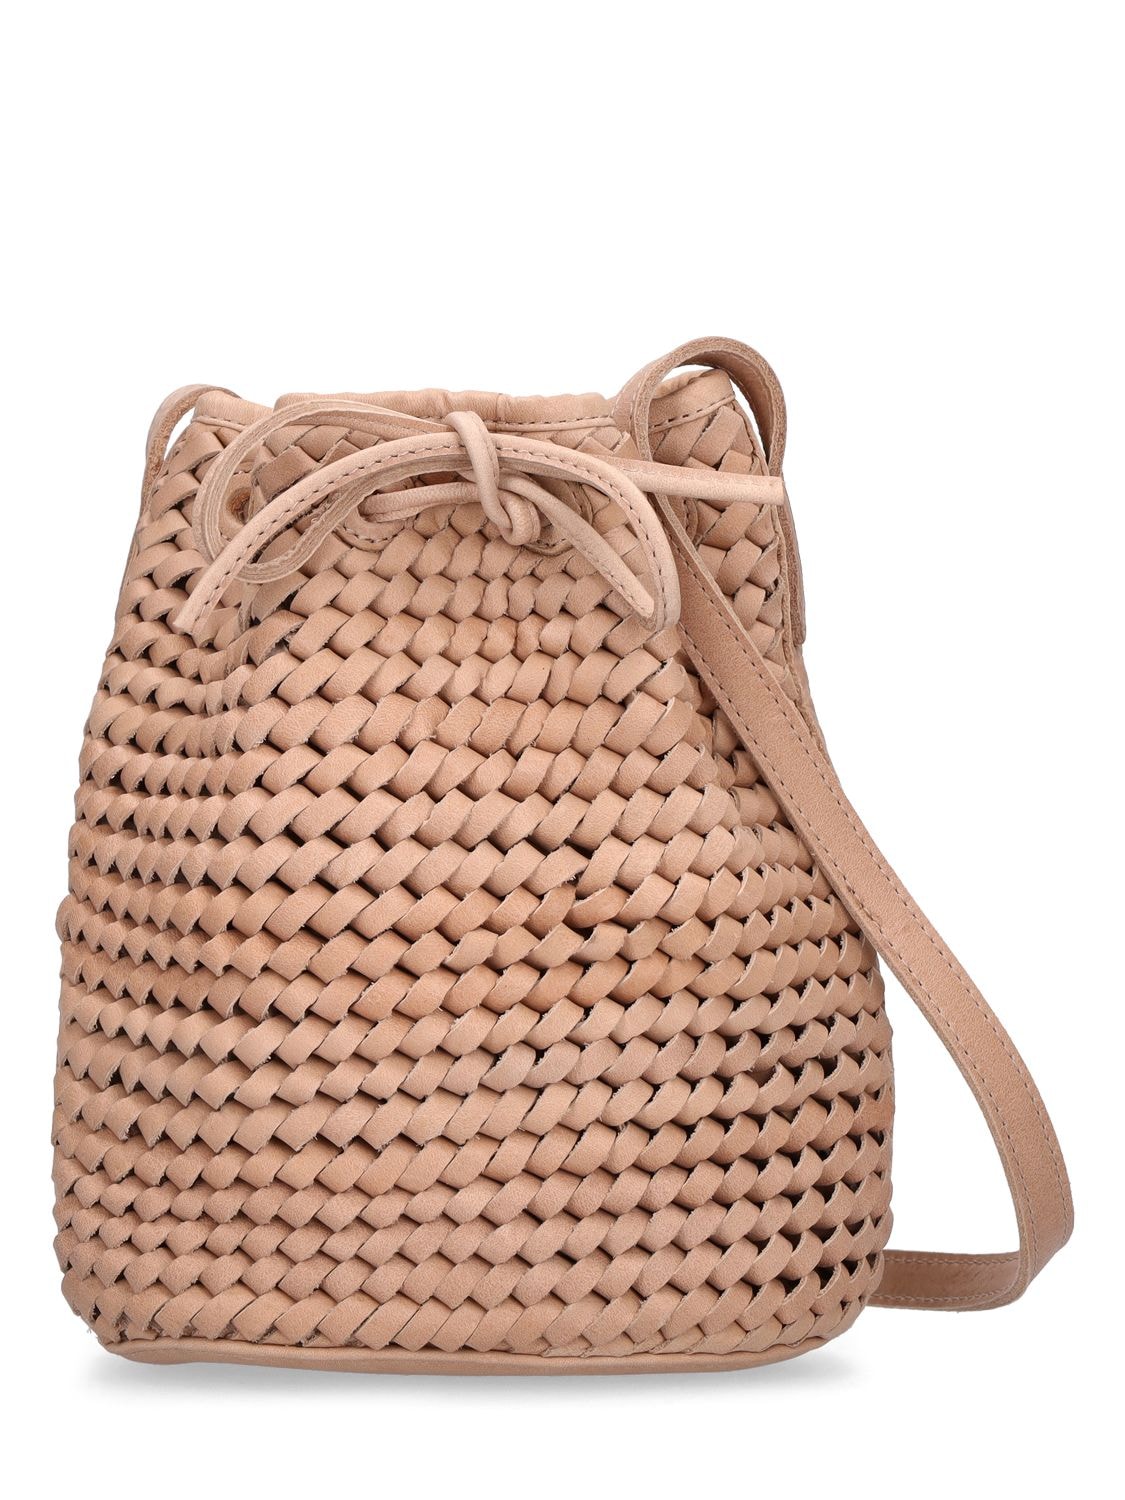 BEMBIEN Isabelle Handwoven Leather Bucket Bag